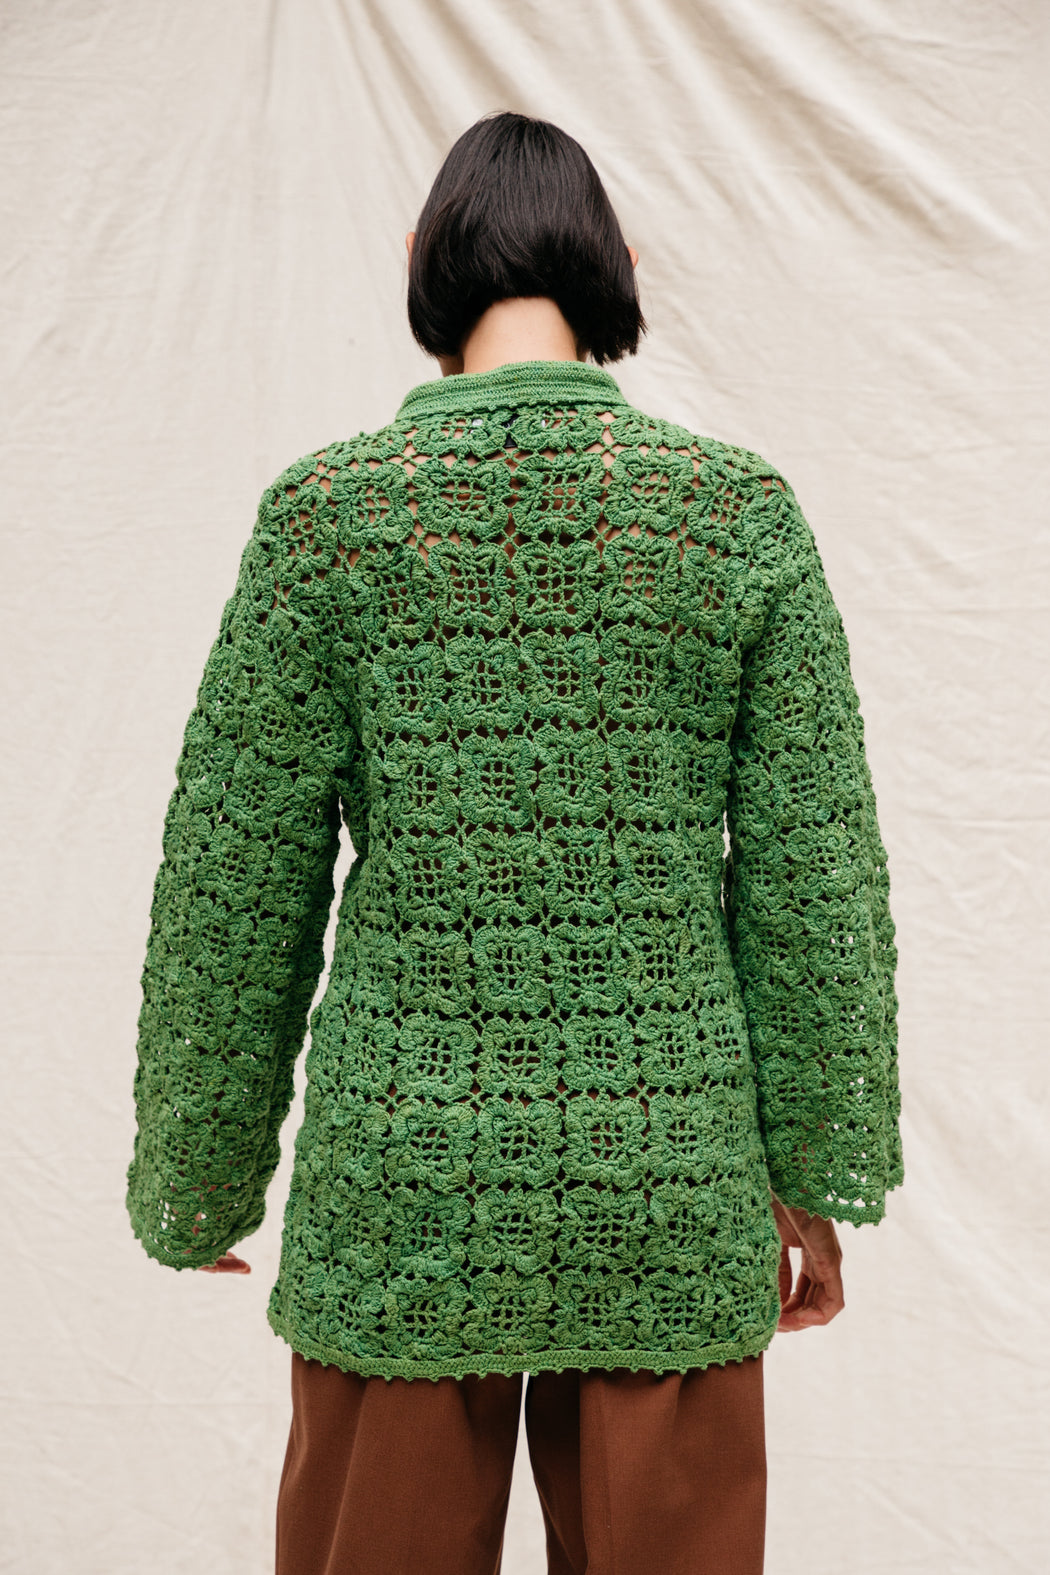 Flora Hand Crochet Cardigan- Pickle